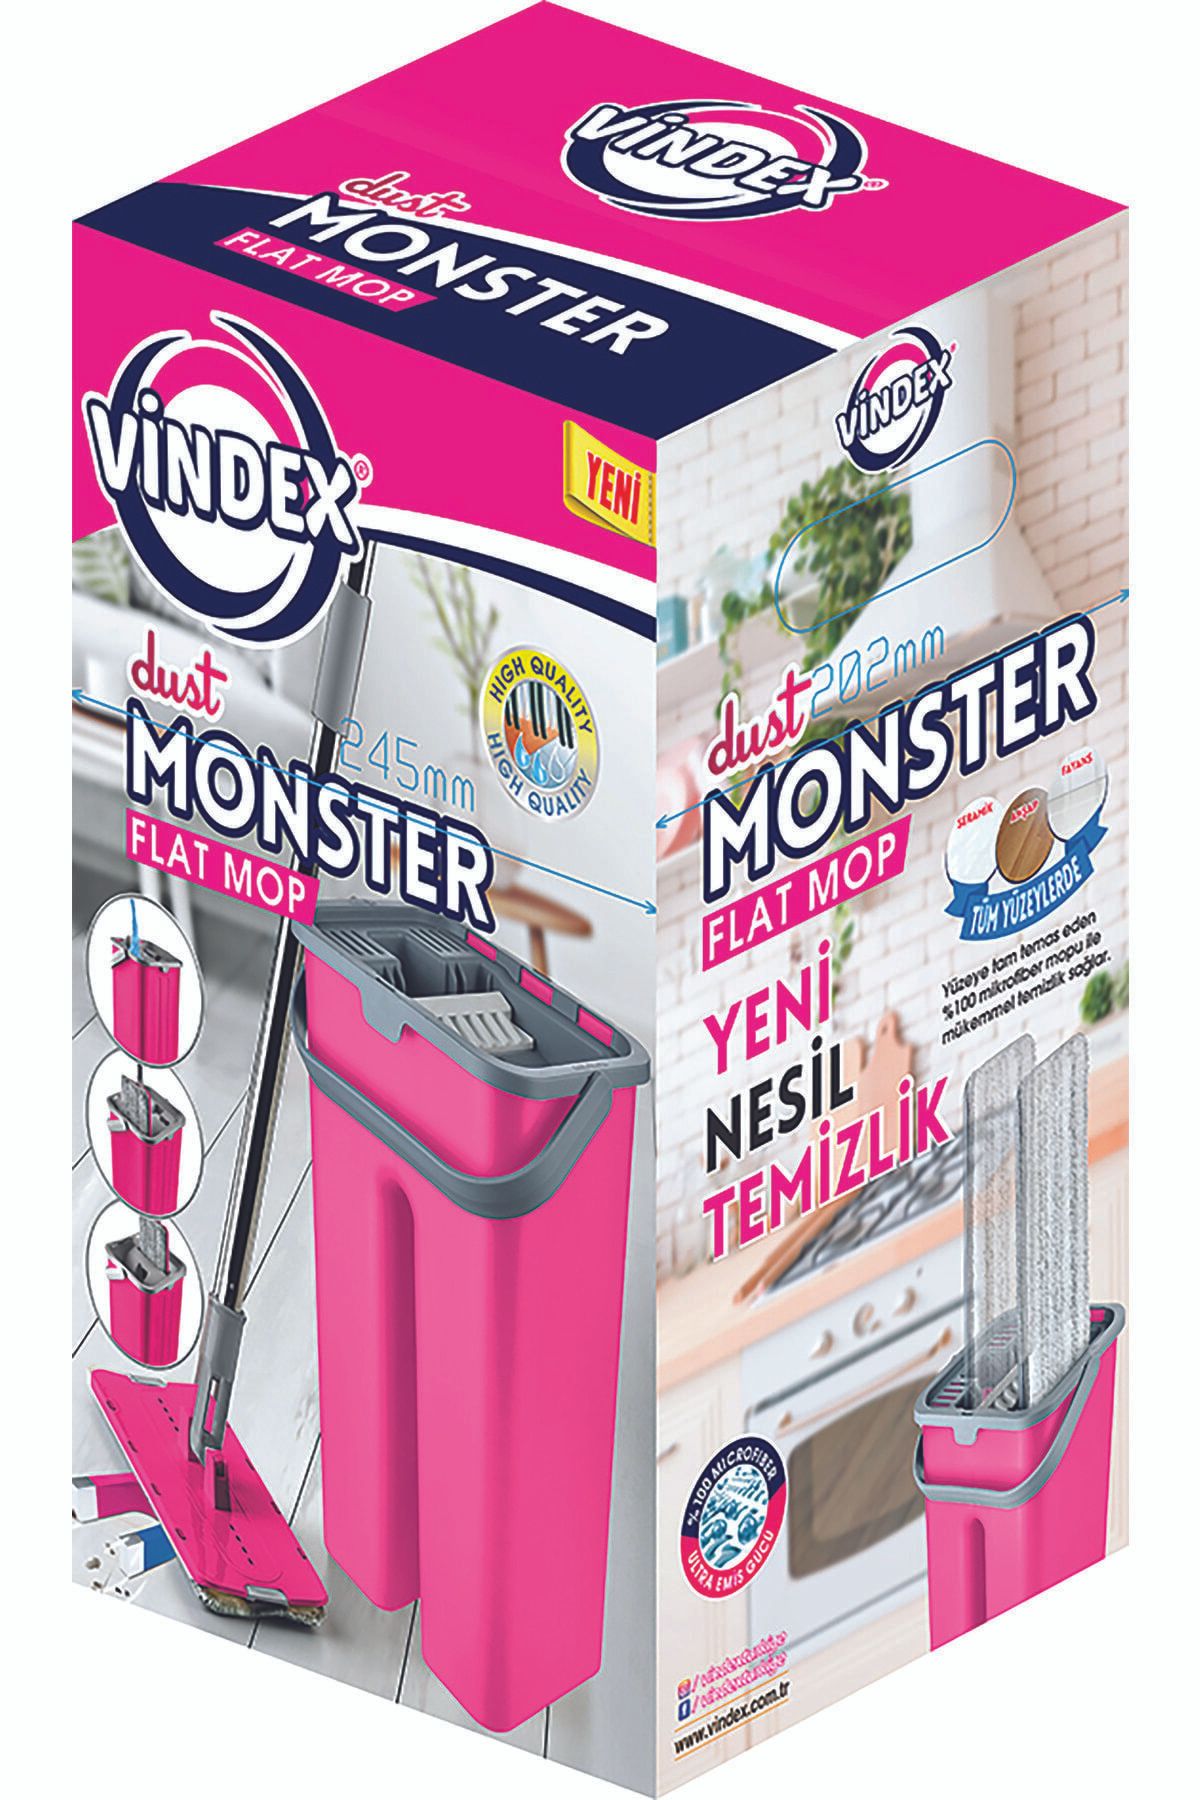 Vindex Dust Monster Flat Mop